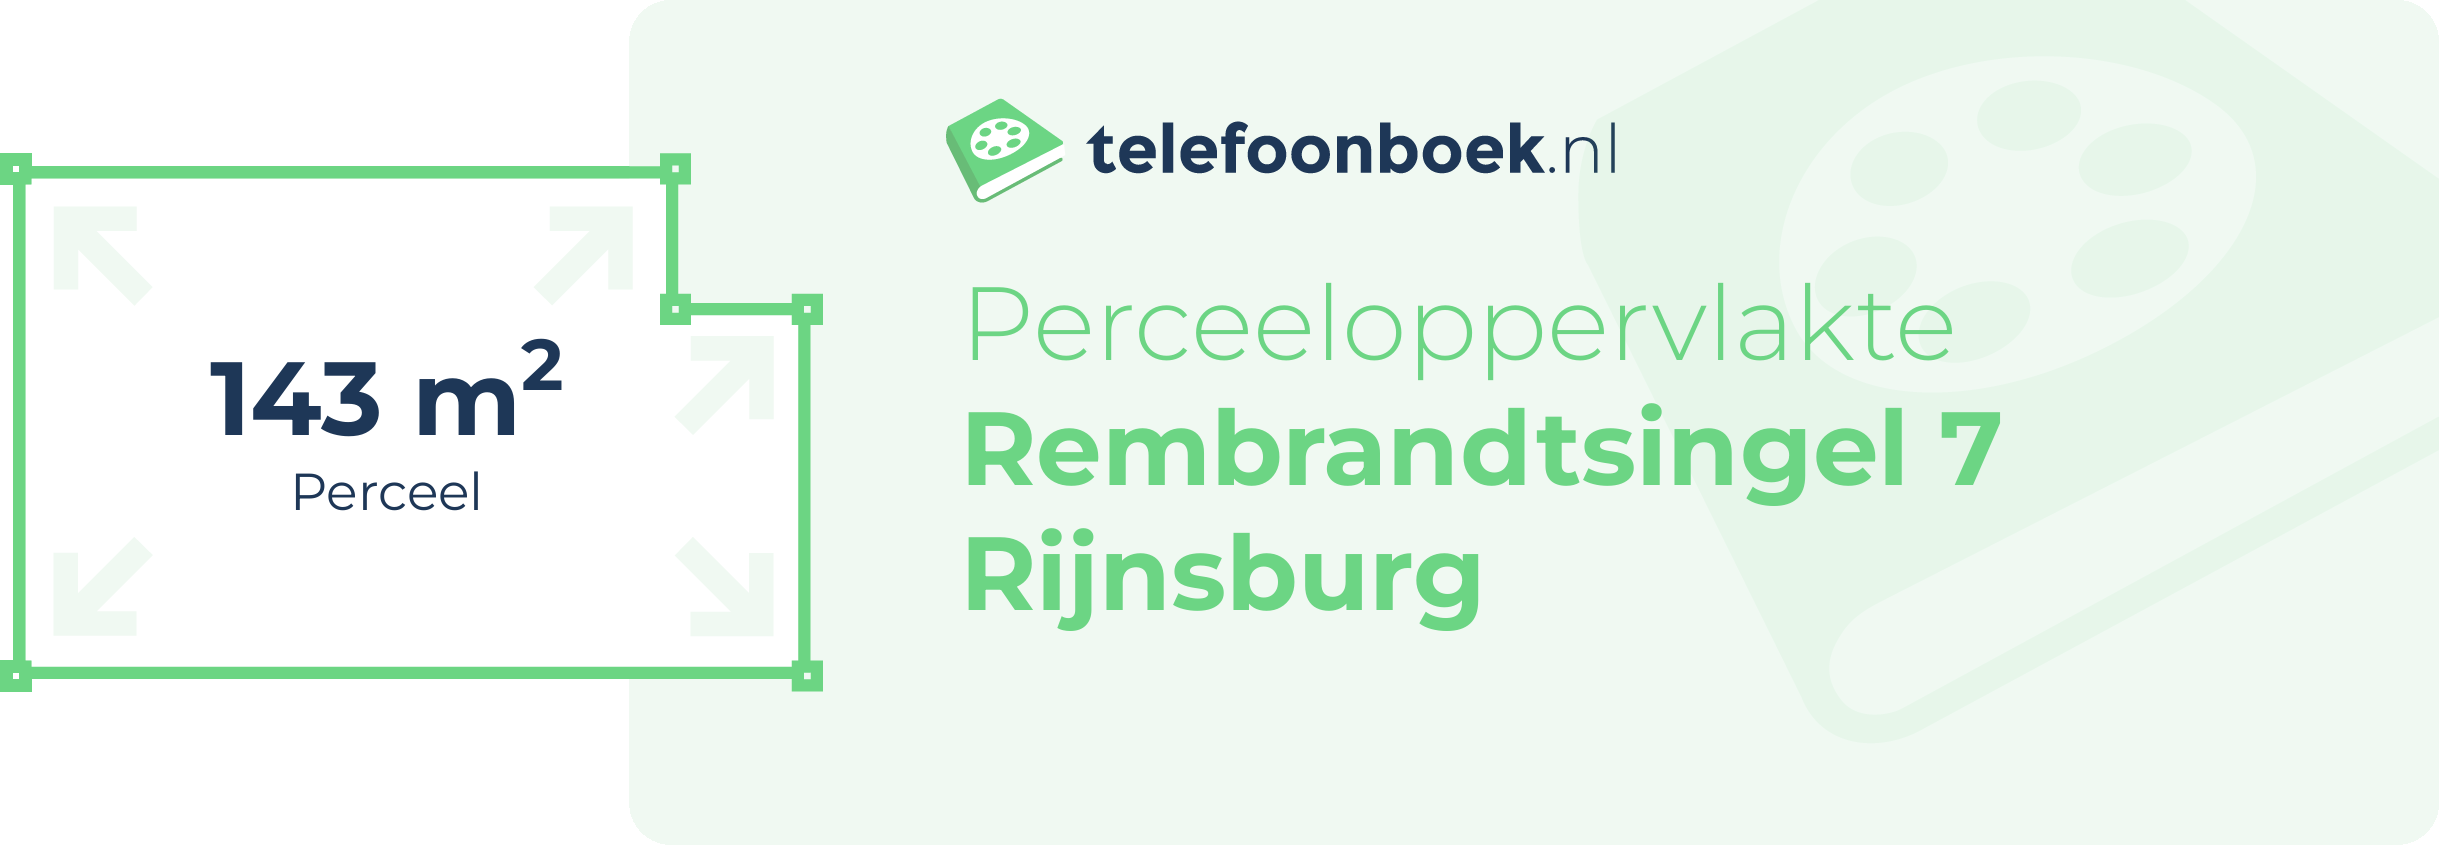 Perceeloppervlakte Rembrandtsingel 7 Rijnsburg